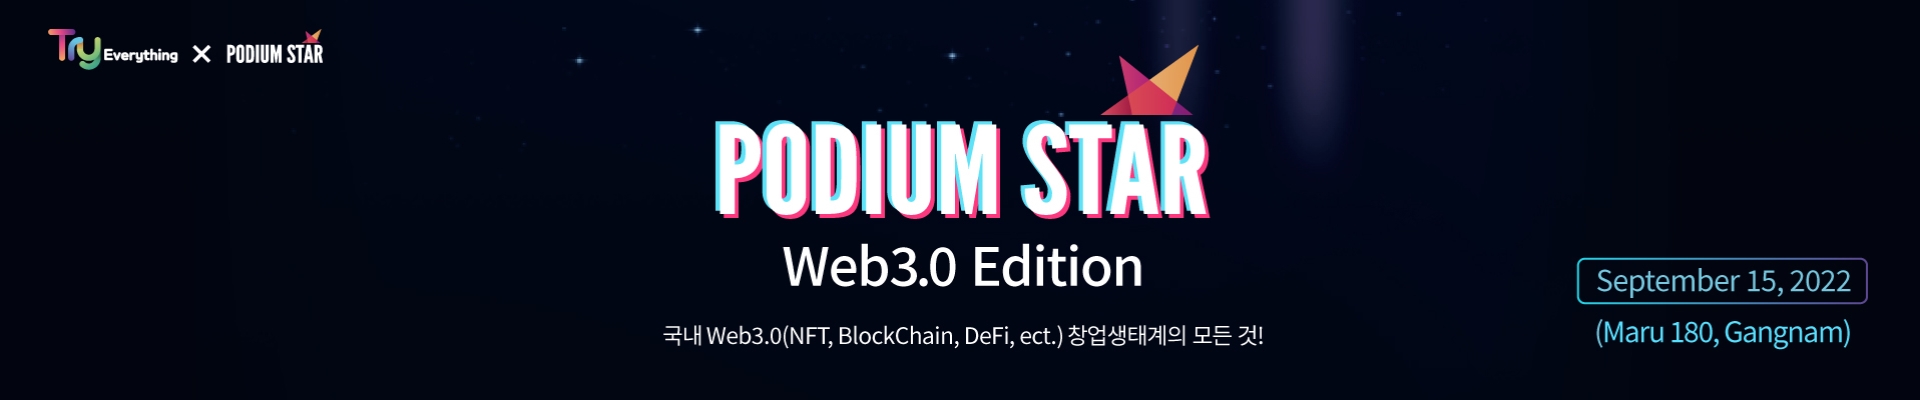 Podium Star Web 3.0 